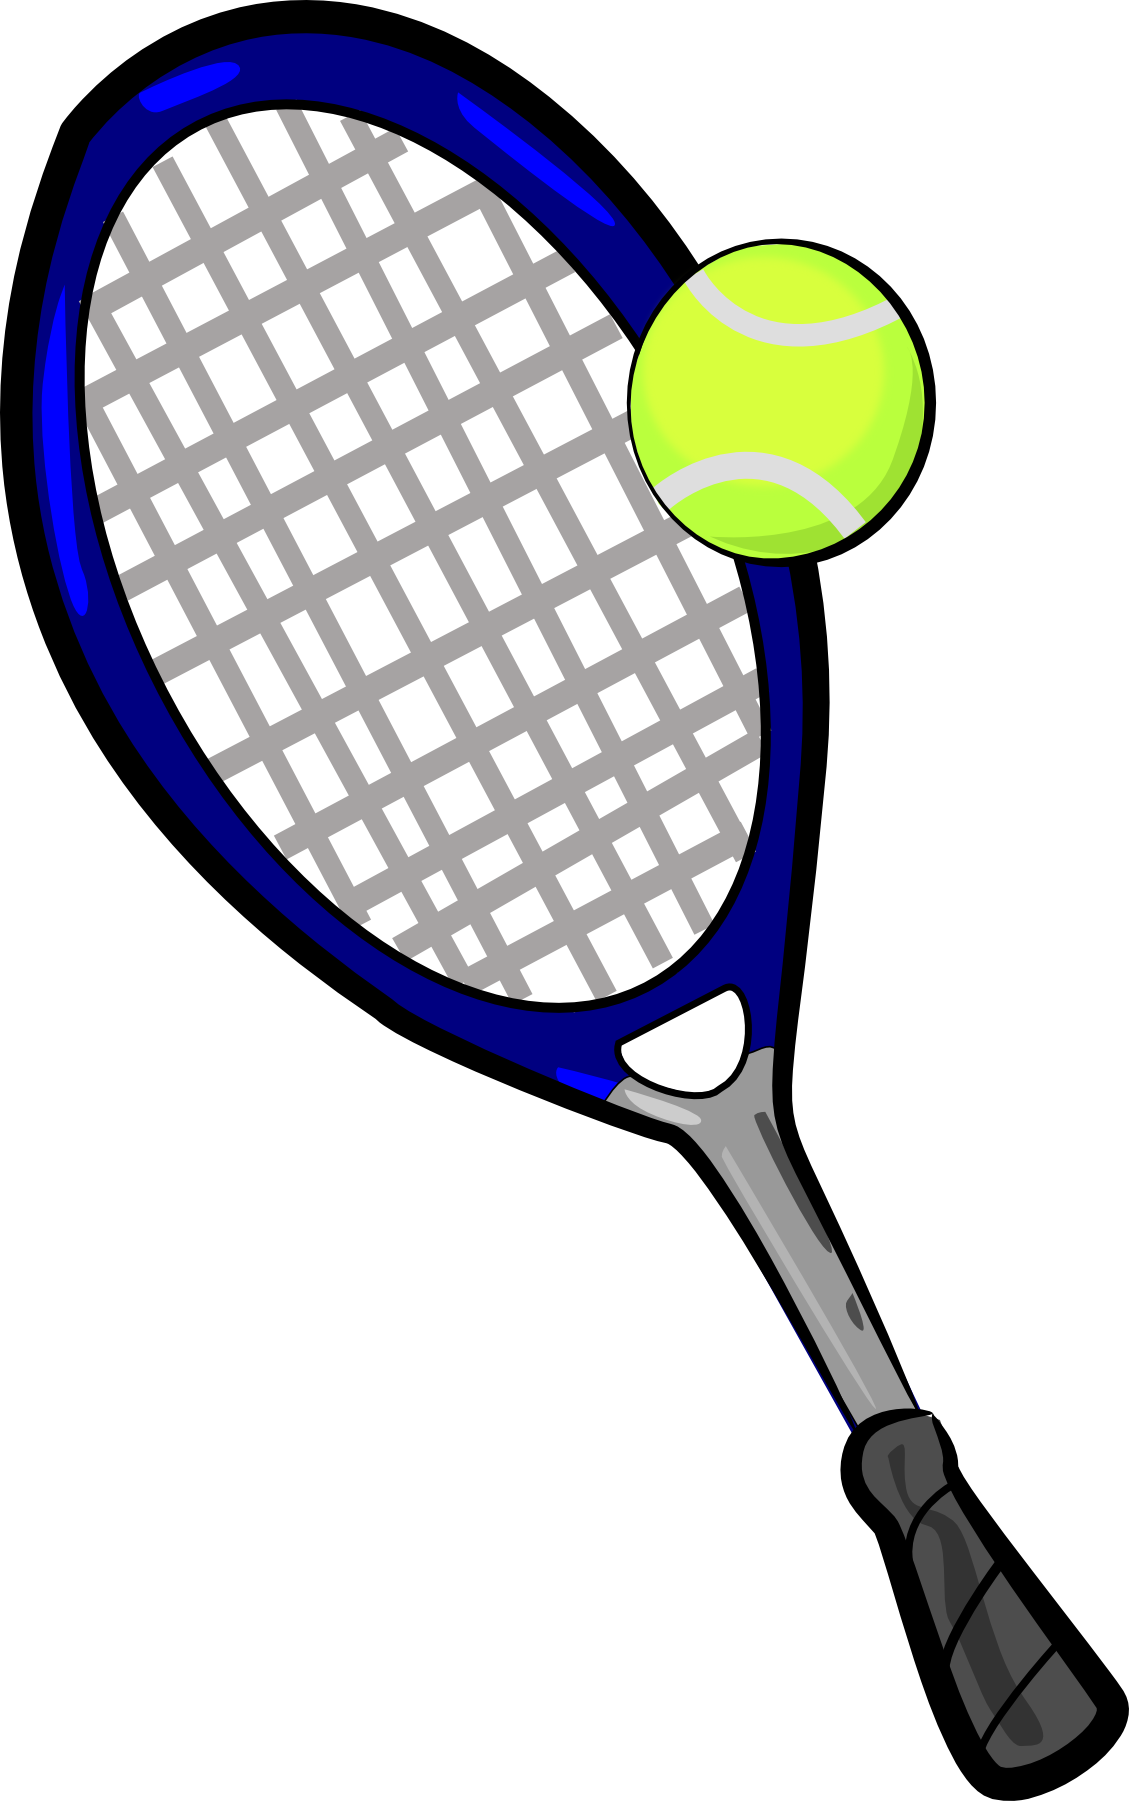 Cosco Cbx-320 Badminton Racke